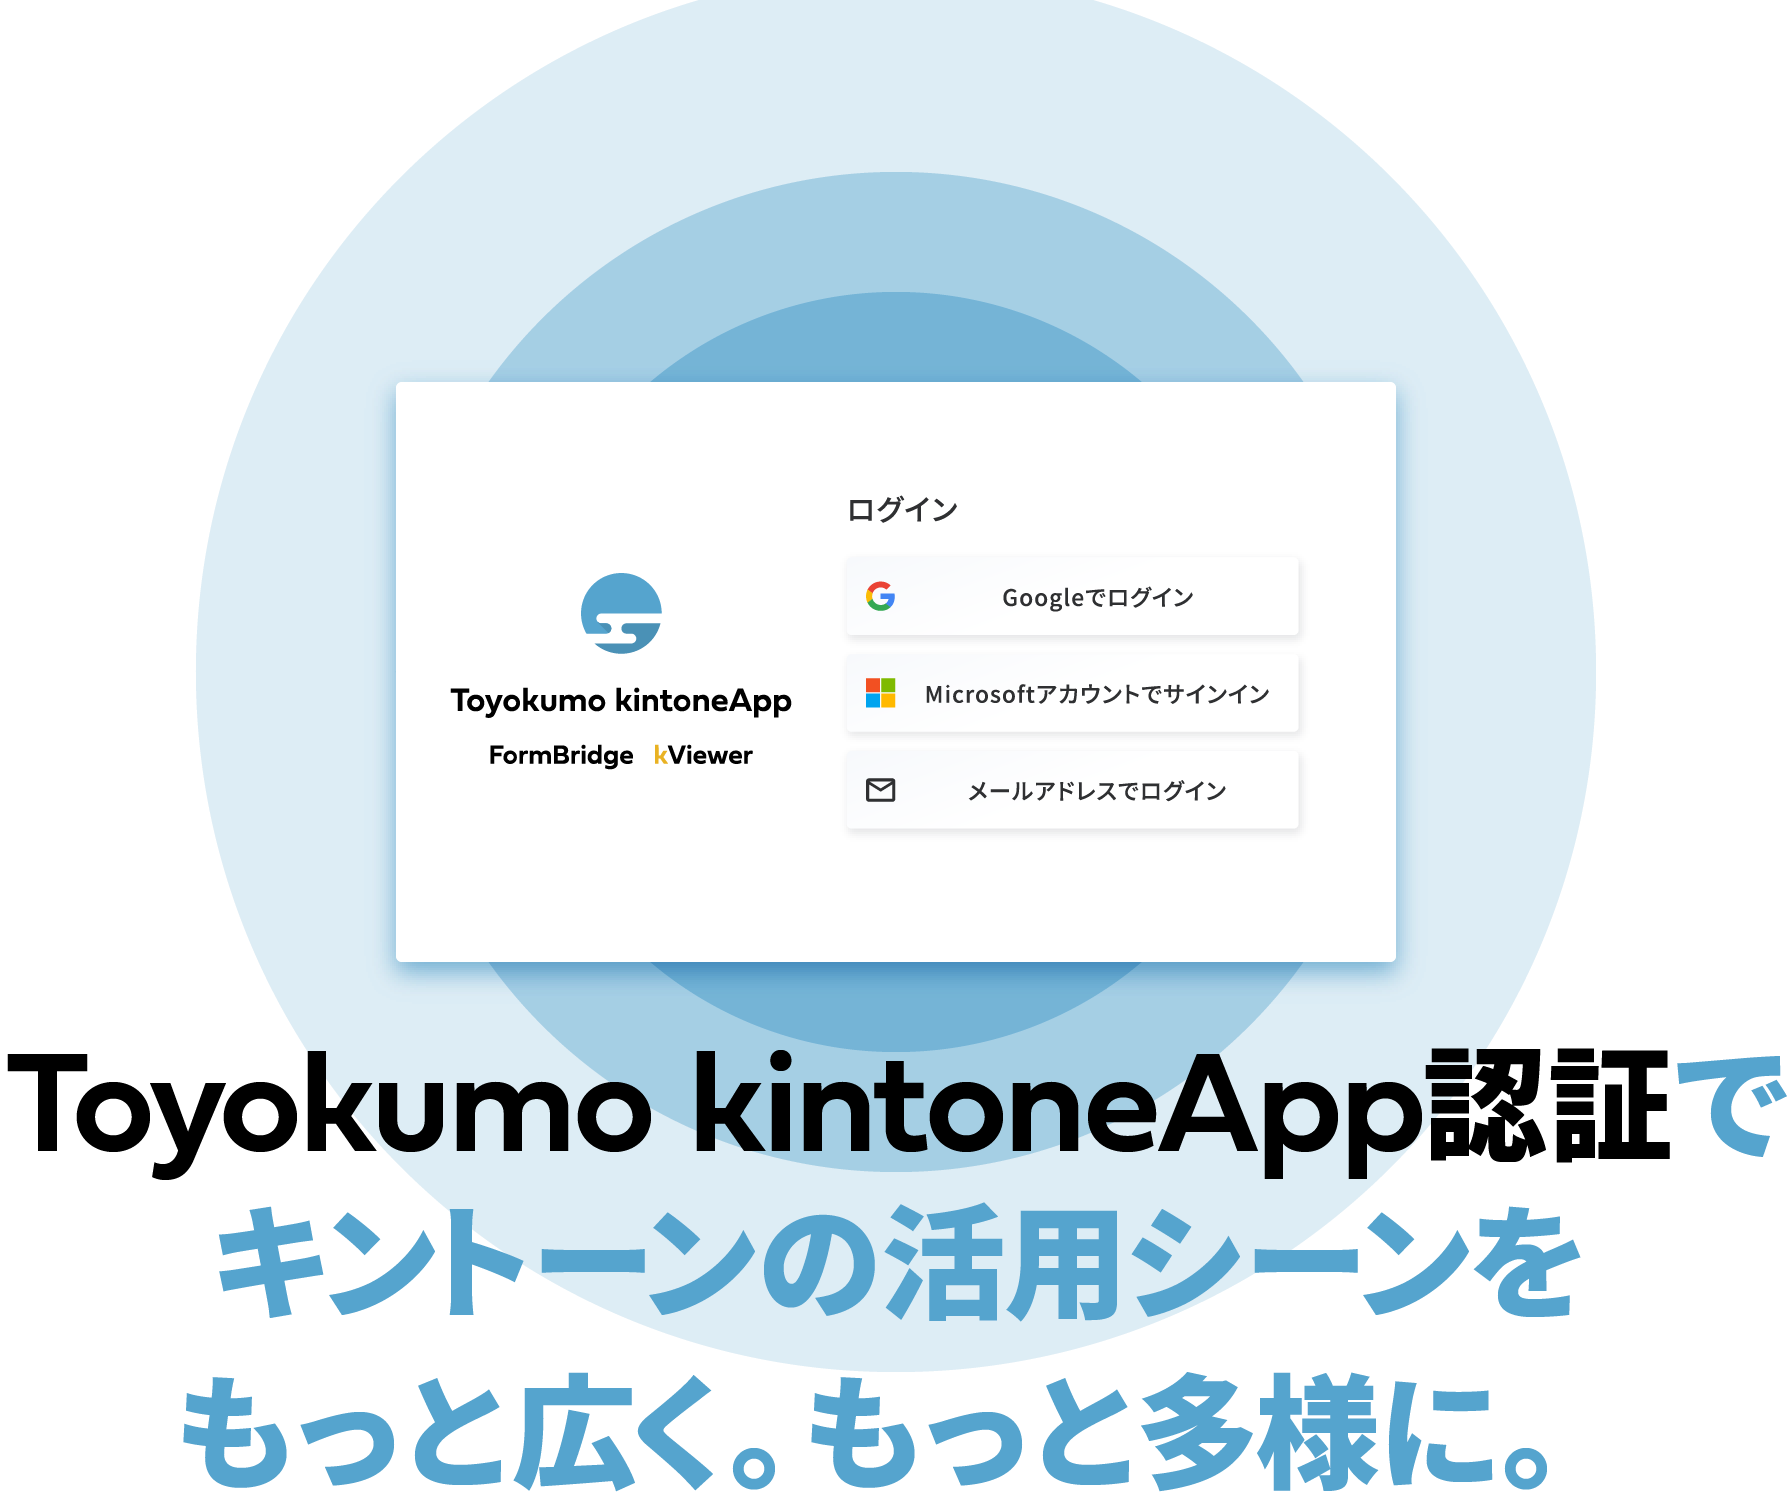 Toyokumo kintoneApp認証でkintoneの活用シーンをもっと広く。もっと多様に。